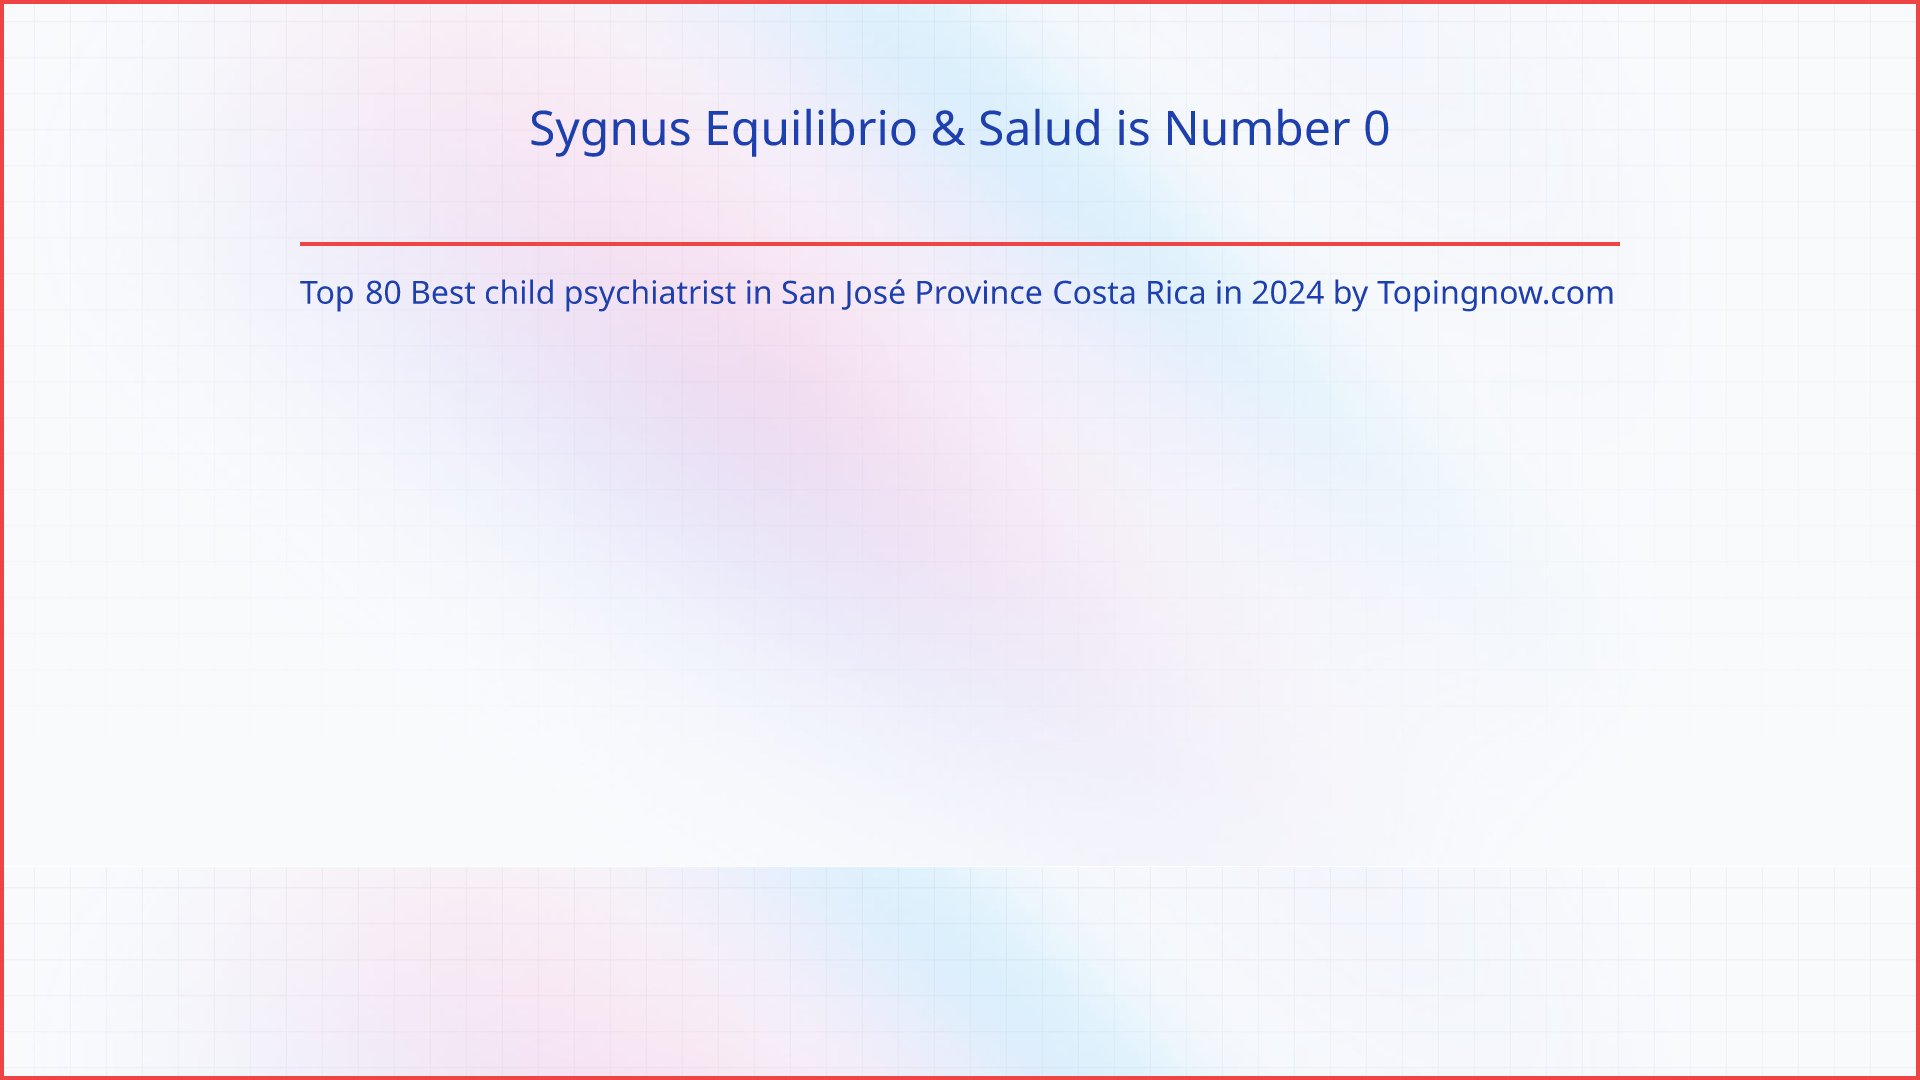 Sygnus Equilibrio & Salud: Top 80 Best child psychiatrist in San José Province Costa Rica in 2024